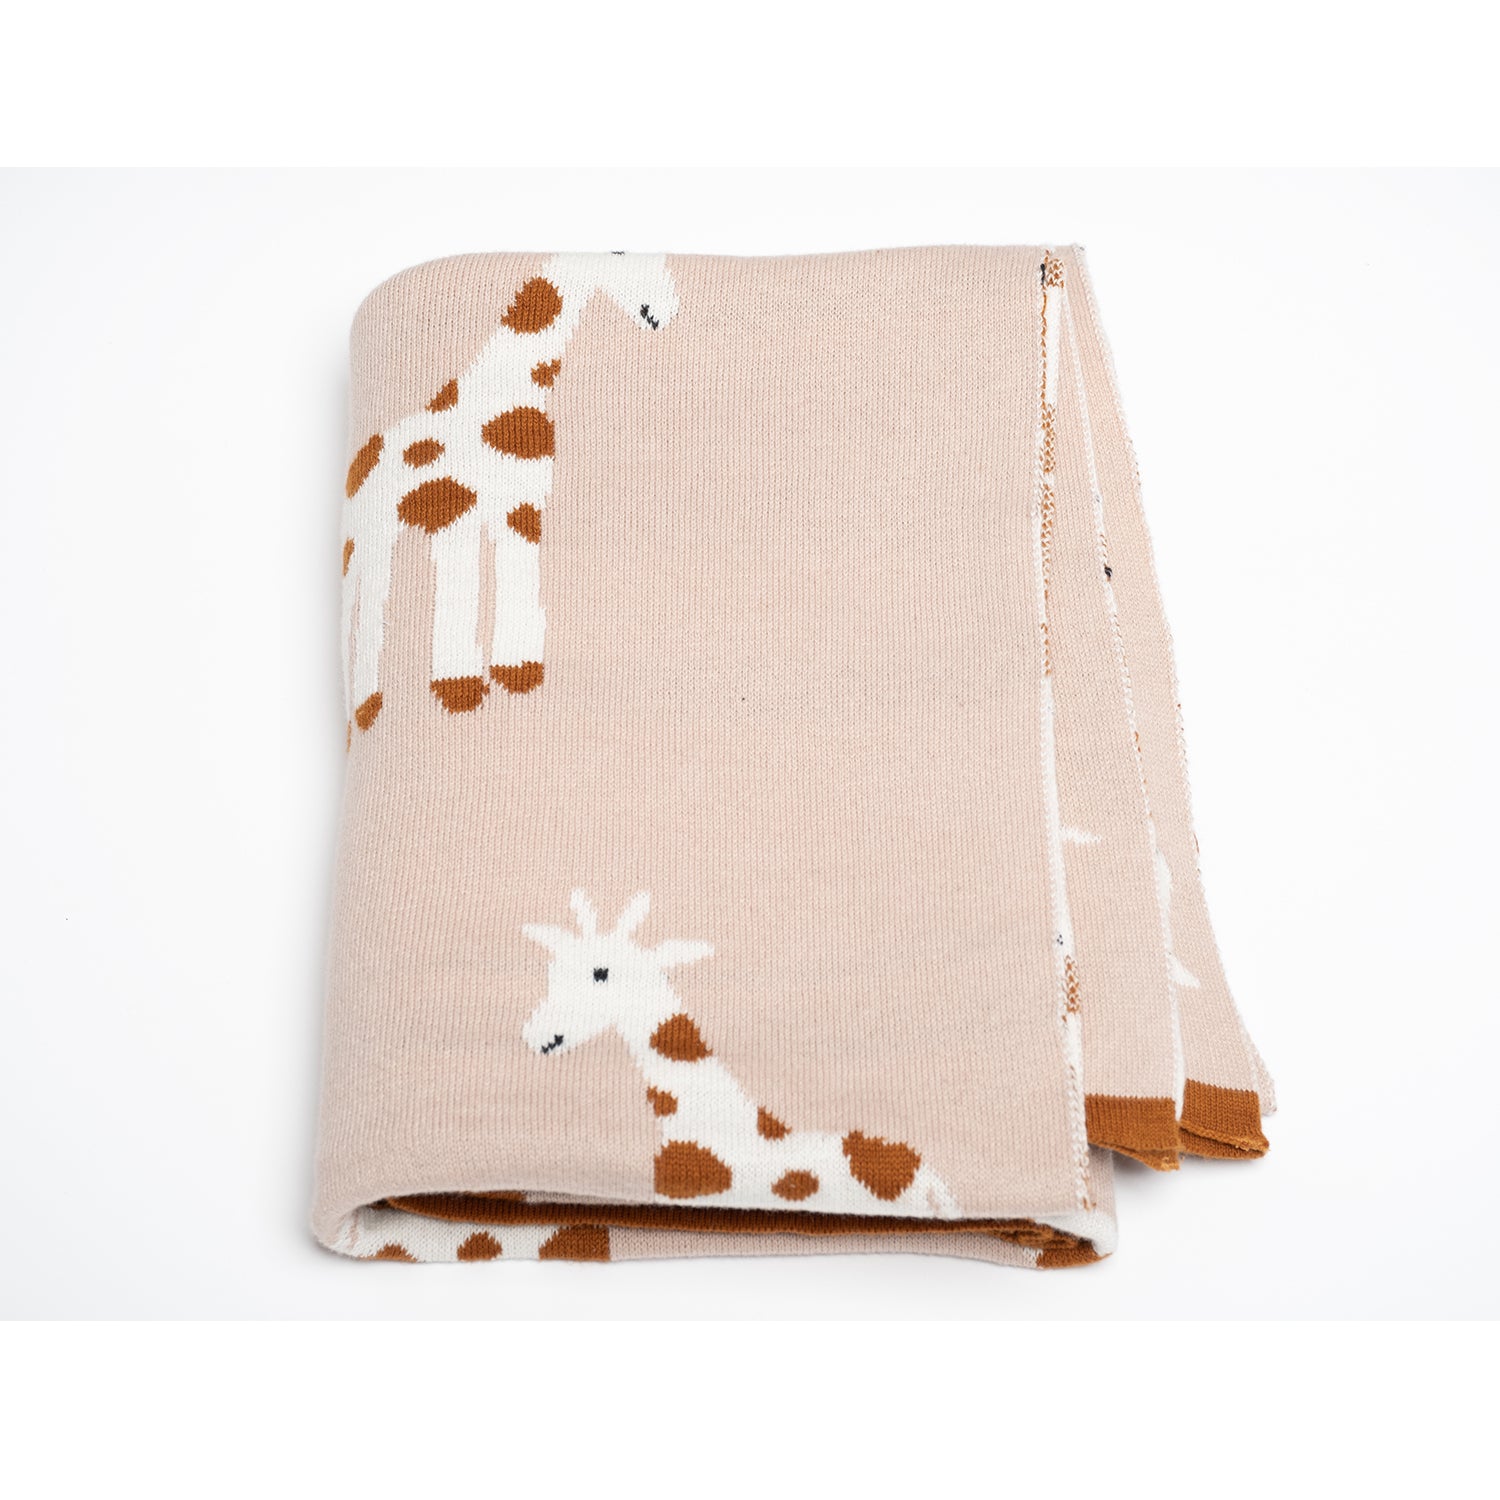 Tidy sleep 100% Cotton Giraffe Print  Multipurpose Knitted Baby Blanket